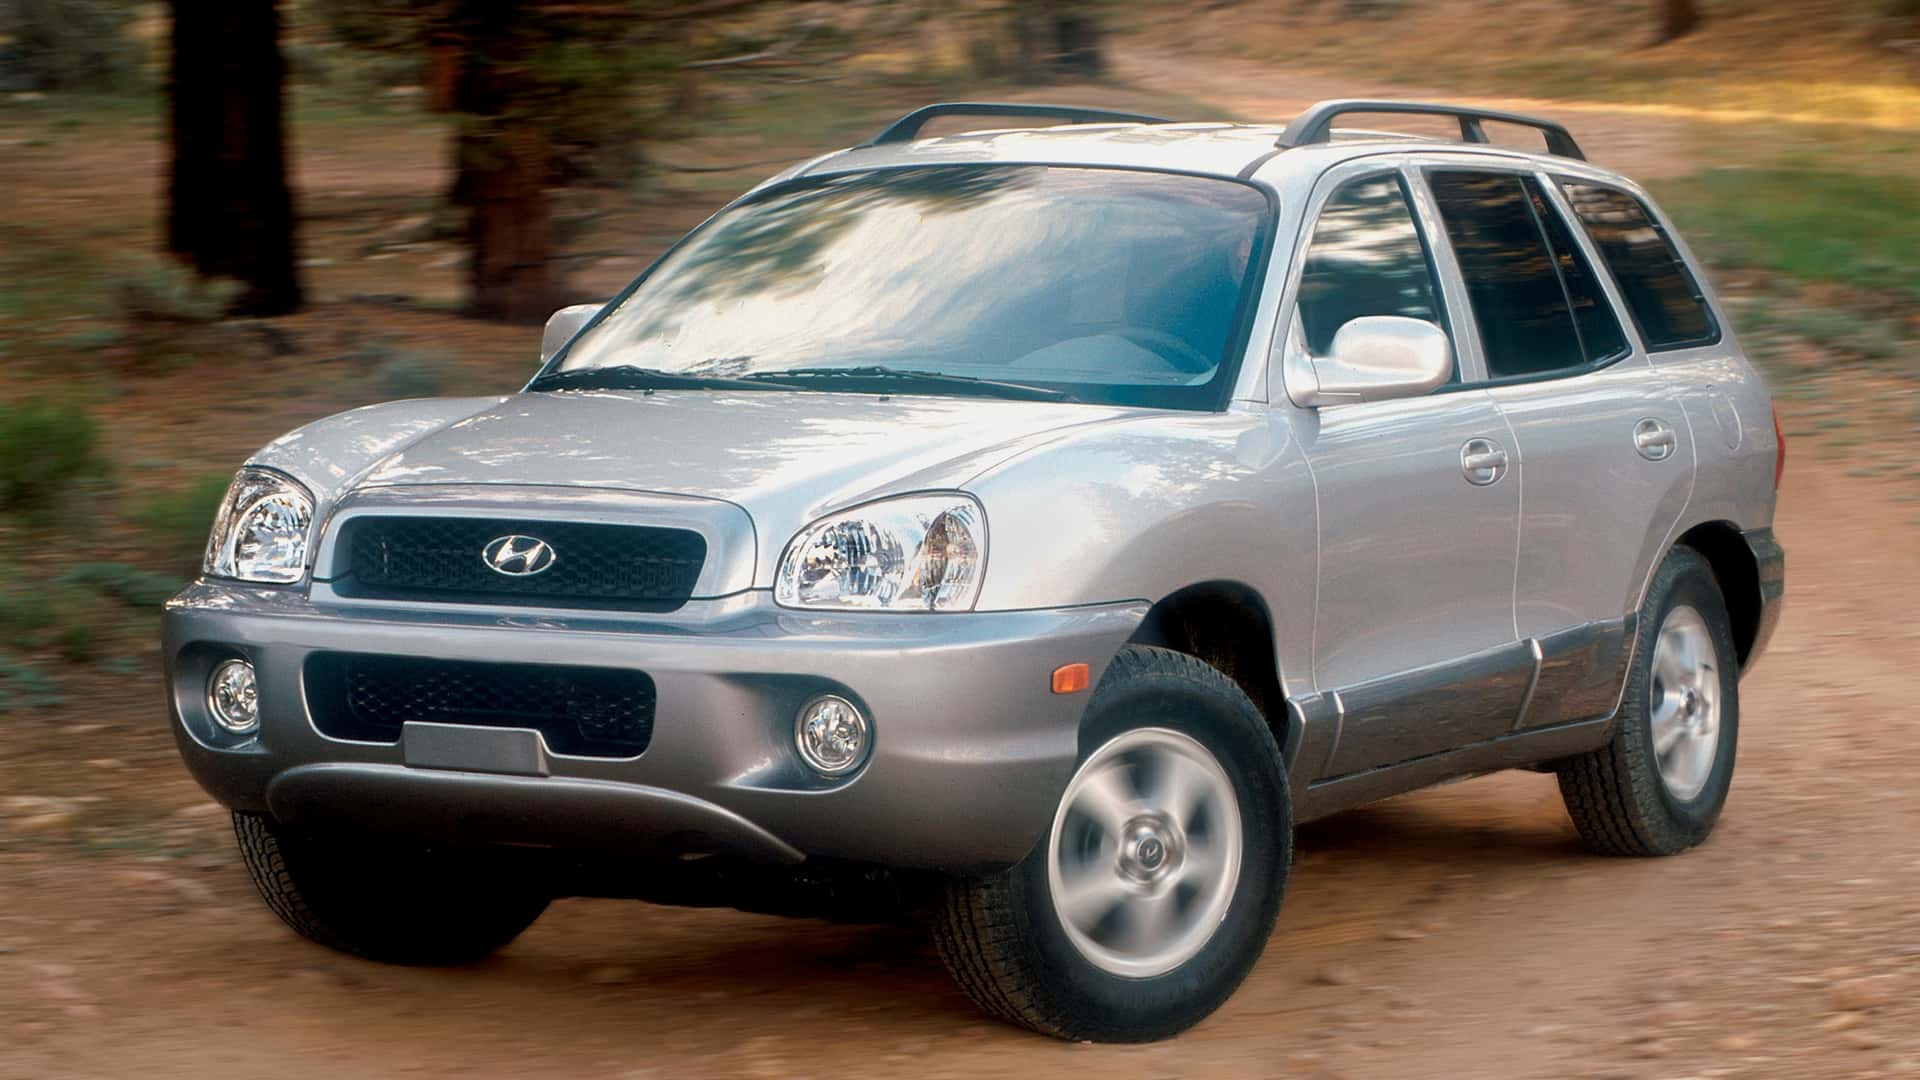 Hyundai Santa Fe thay đổi thiết kế như thế nào qua 5 thế hệ? first-gen-hyundai-santa-fe.jpg